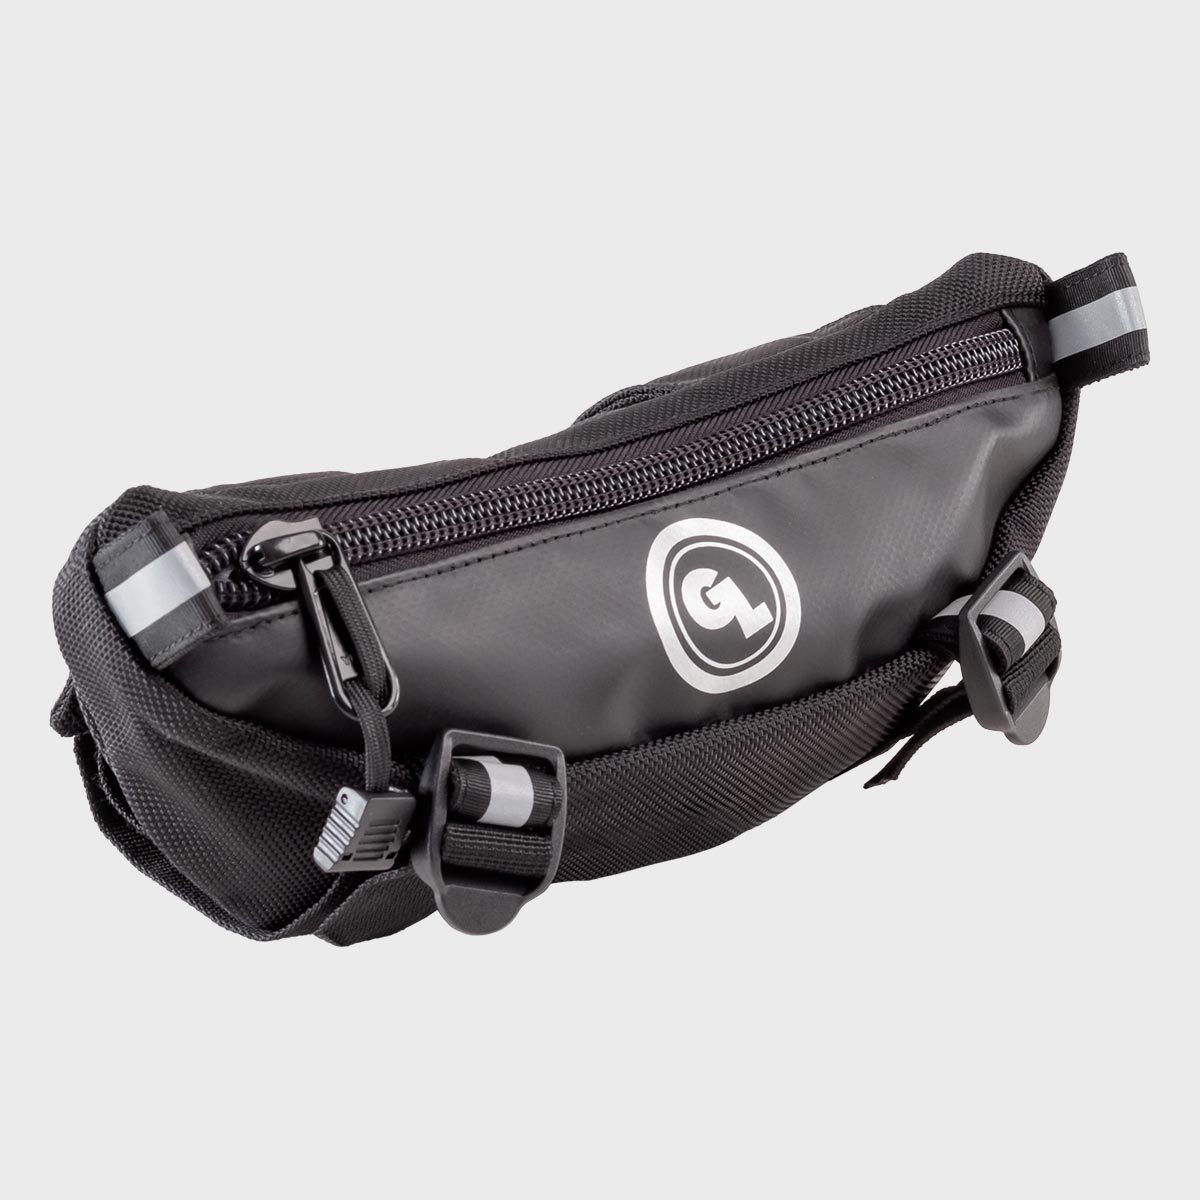 Belt loop purses (great for bikers)